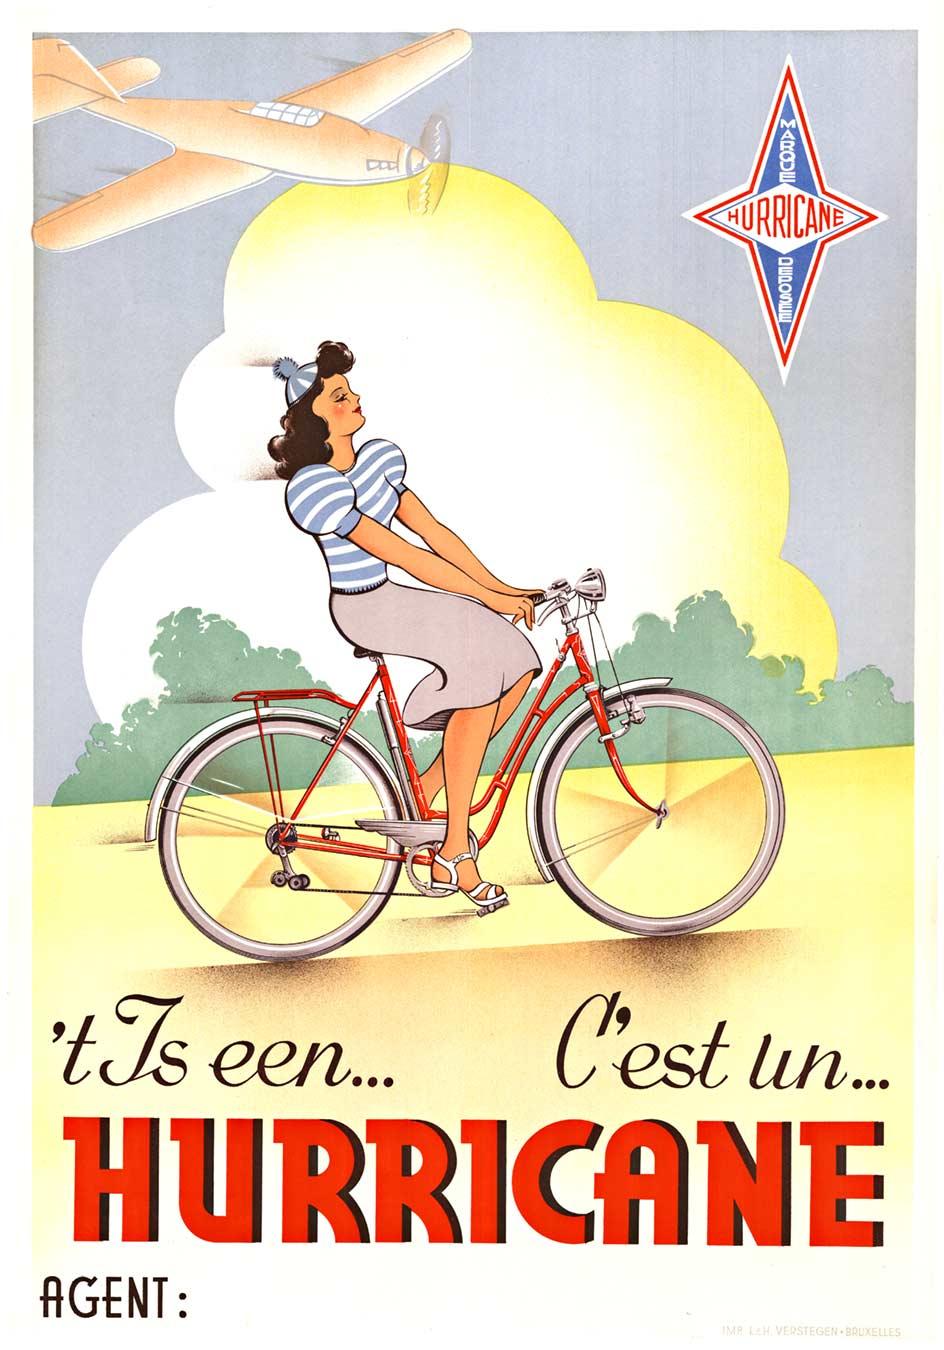 Original "C'est un Hurricane" vintage bicycle pin-up style poster